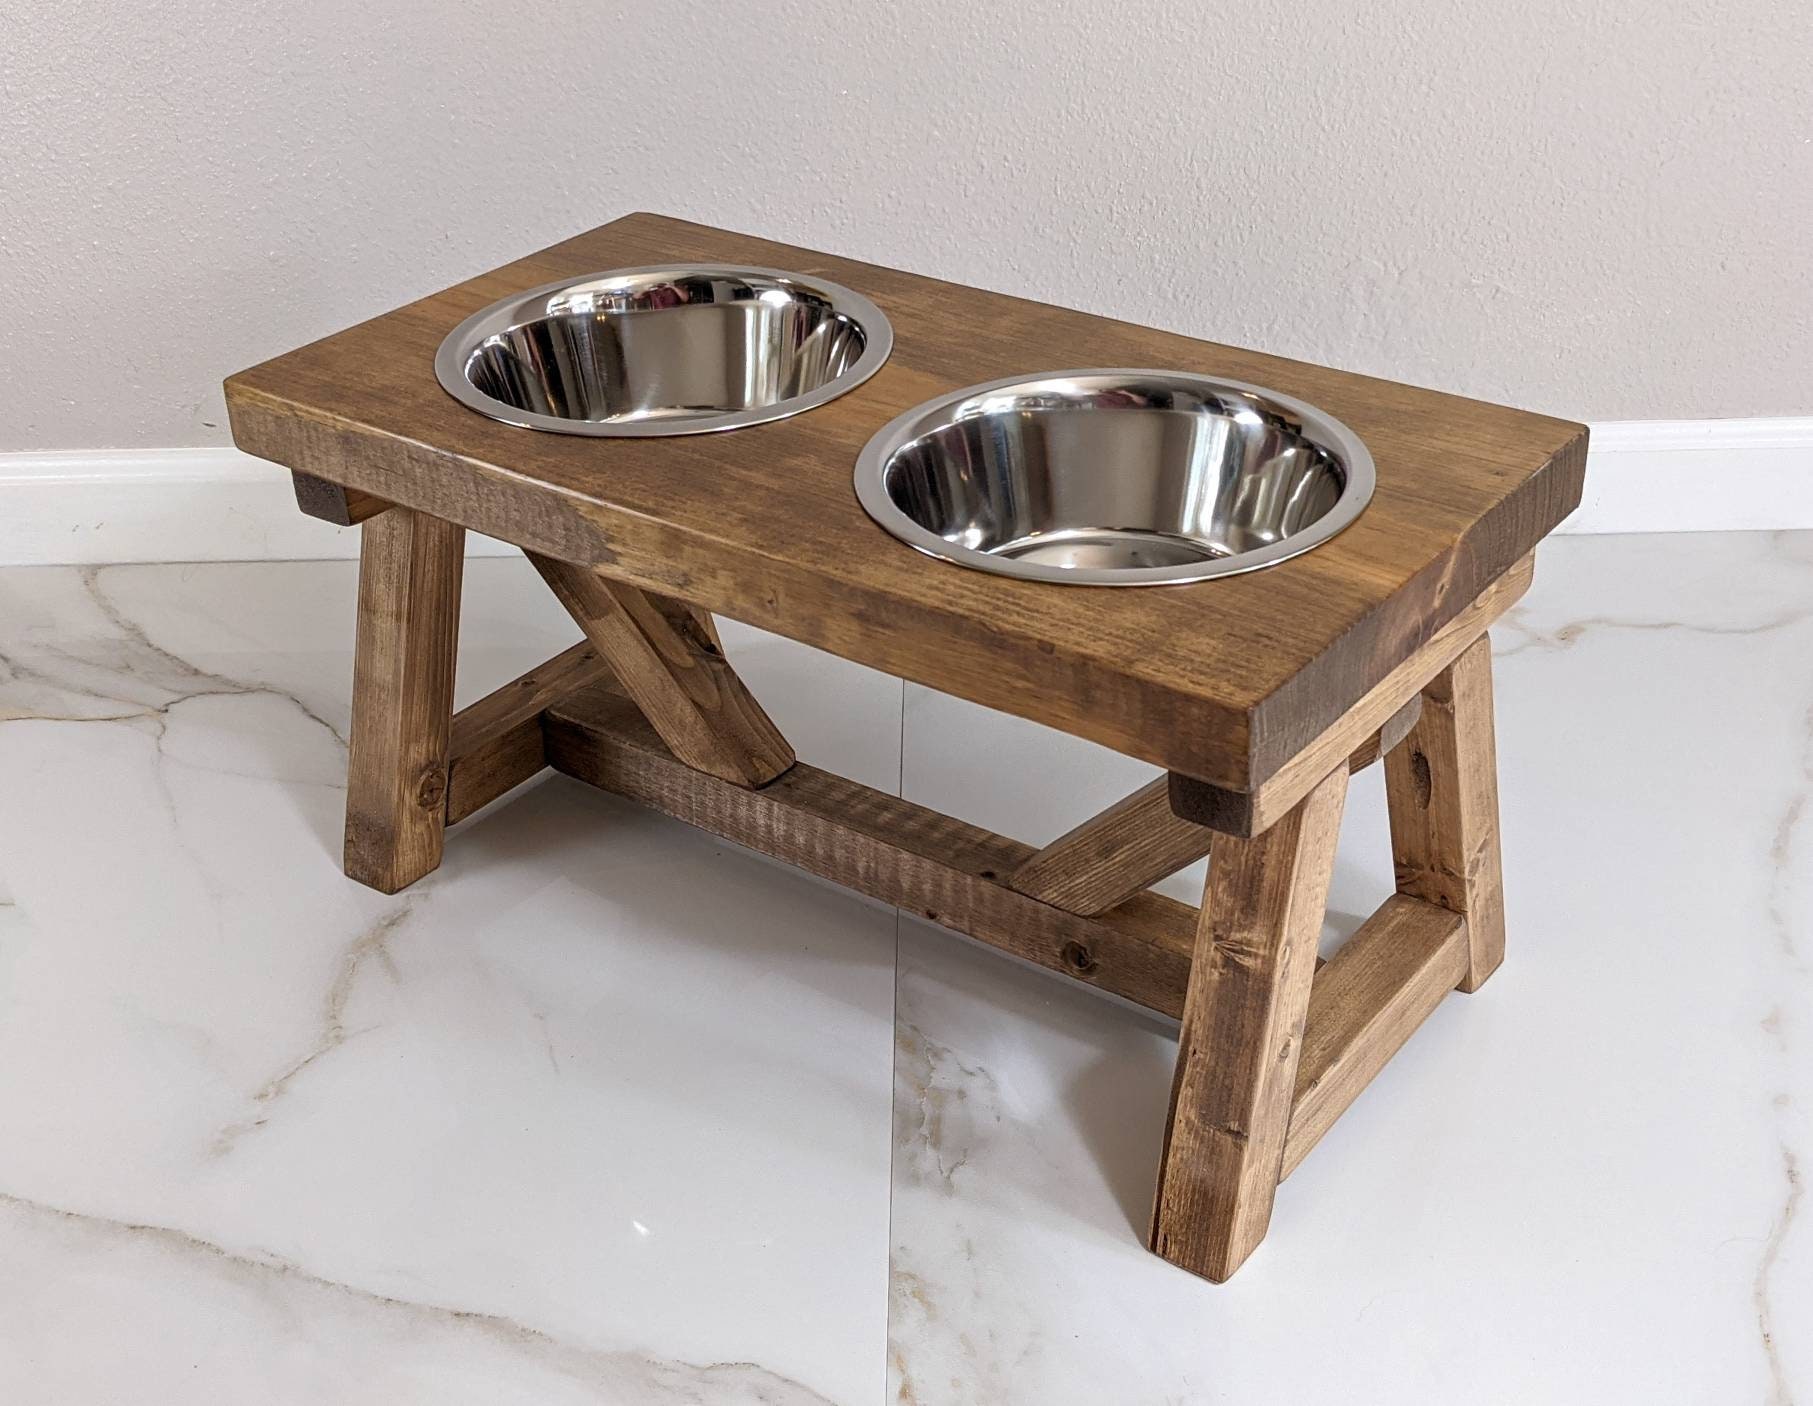 DIY Modern Elevated Dog Bowl Stand - Handmade Weekly